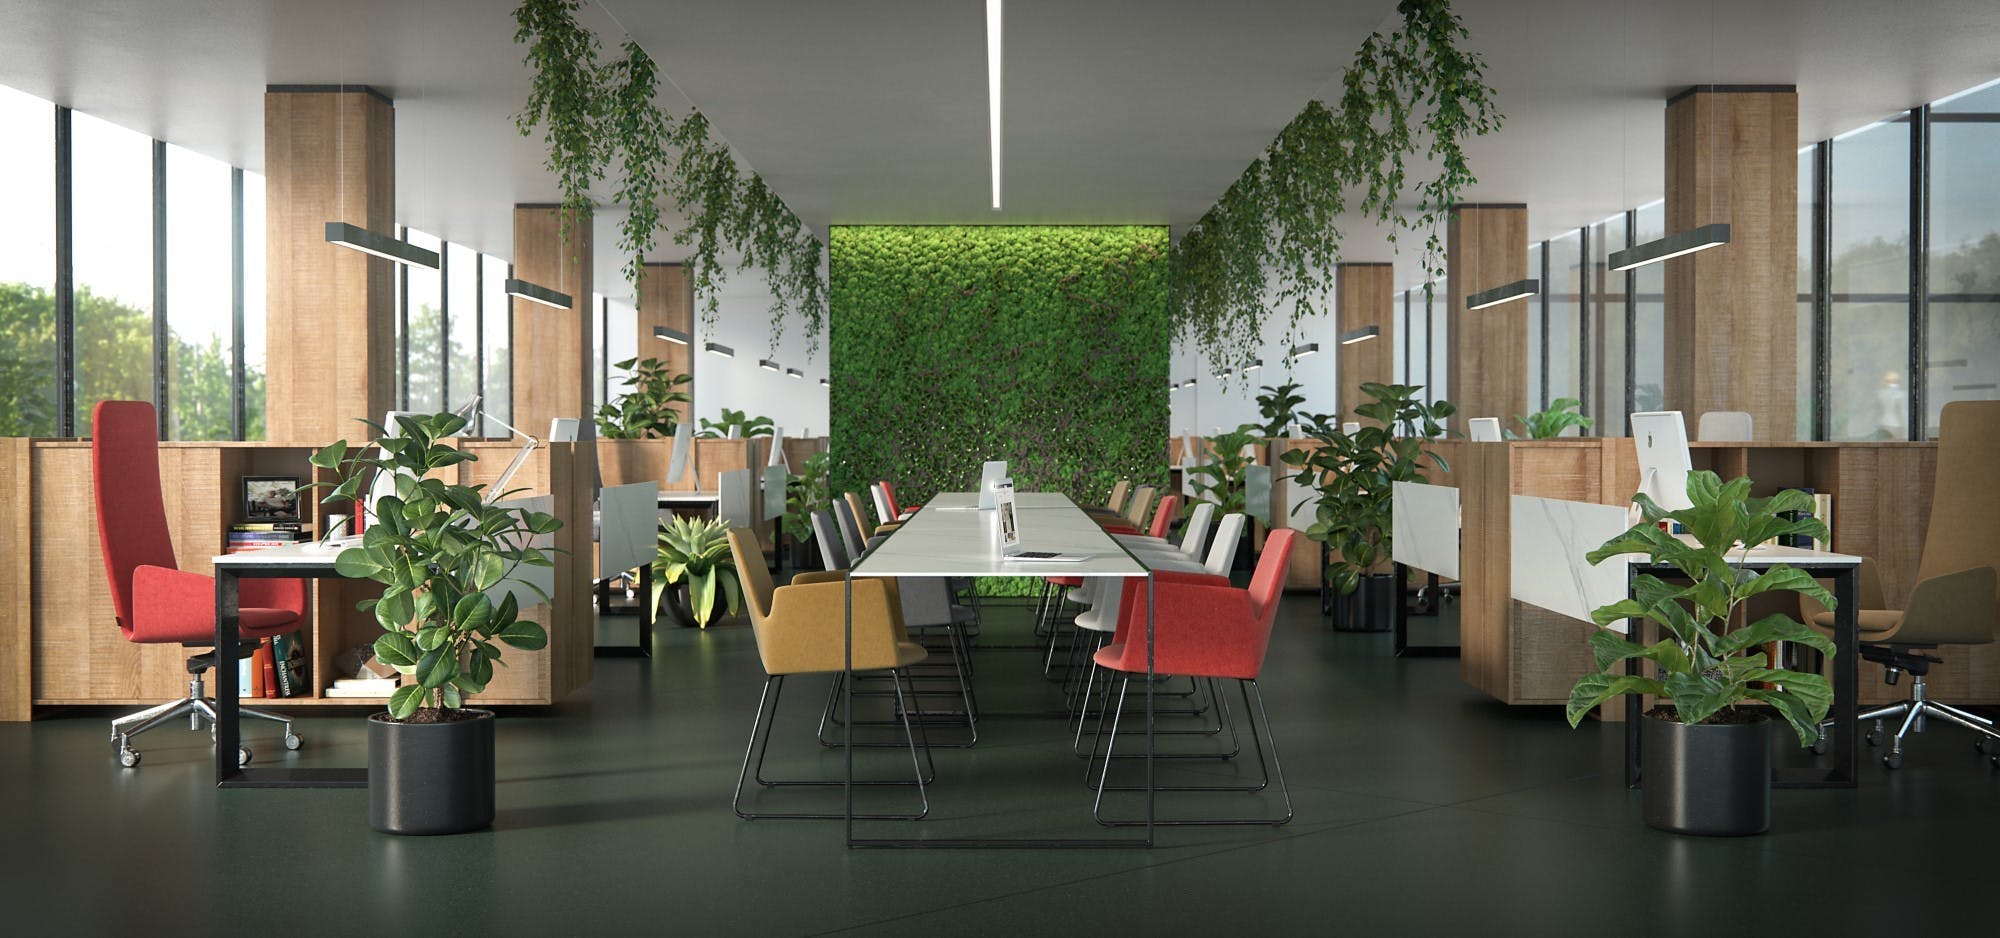 Image 34 of Dekton Office Feroe baja 1 in Dekton® launches shades of dark blue and green, affording elegance to any space - Cosentino